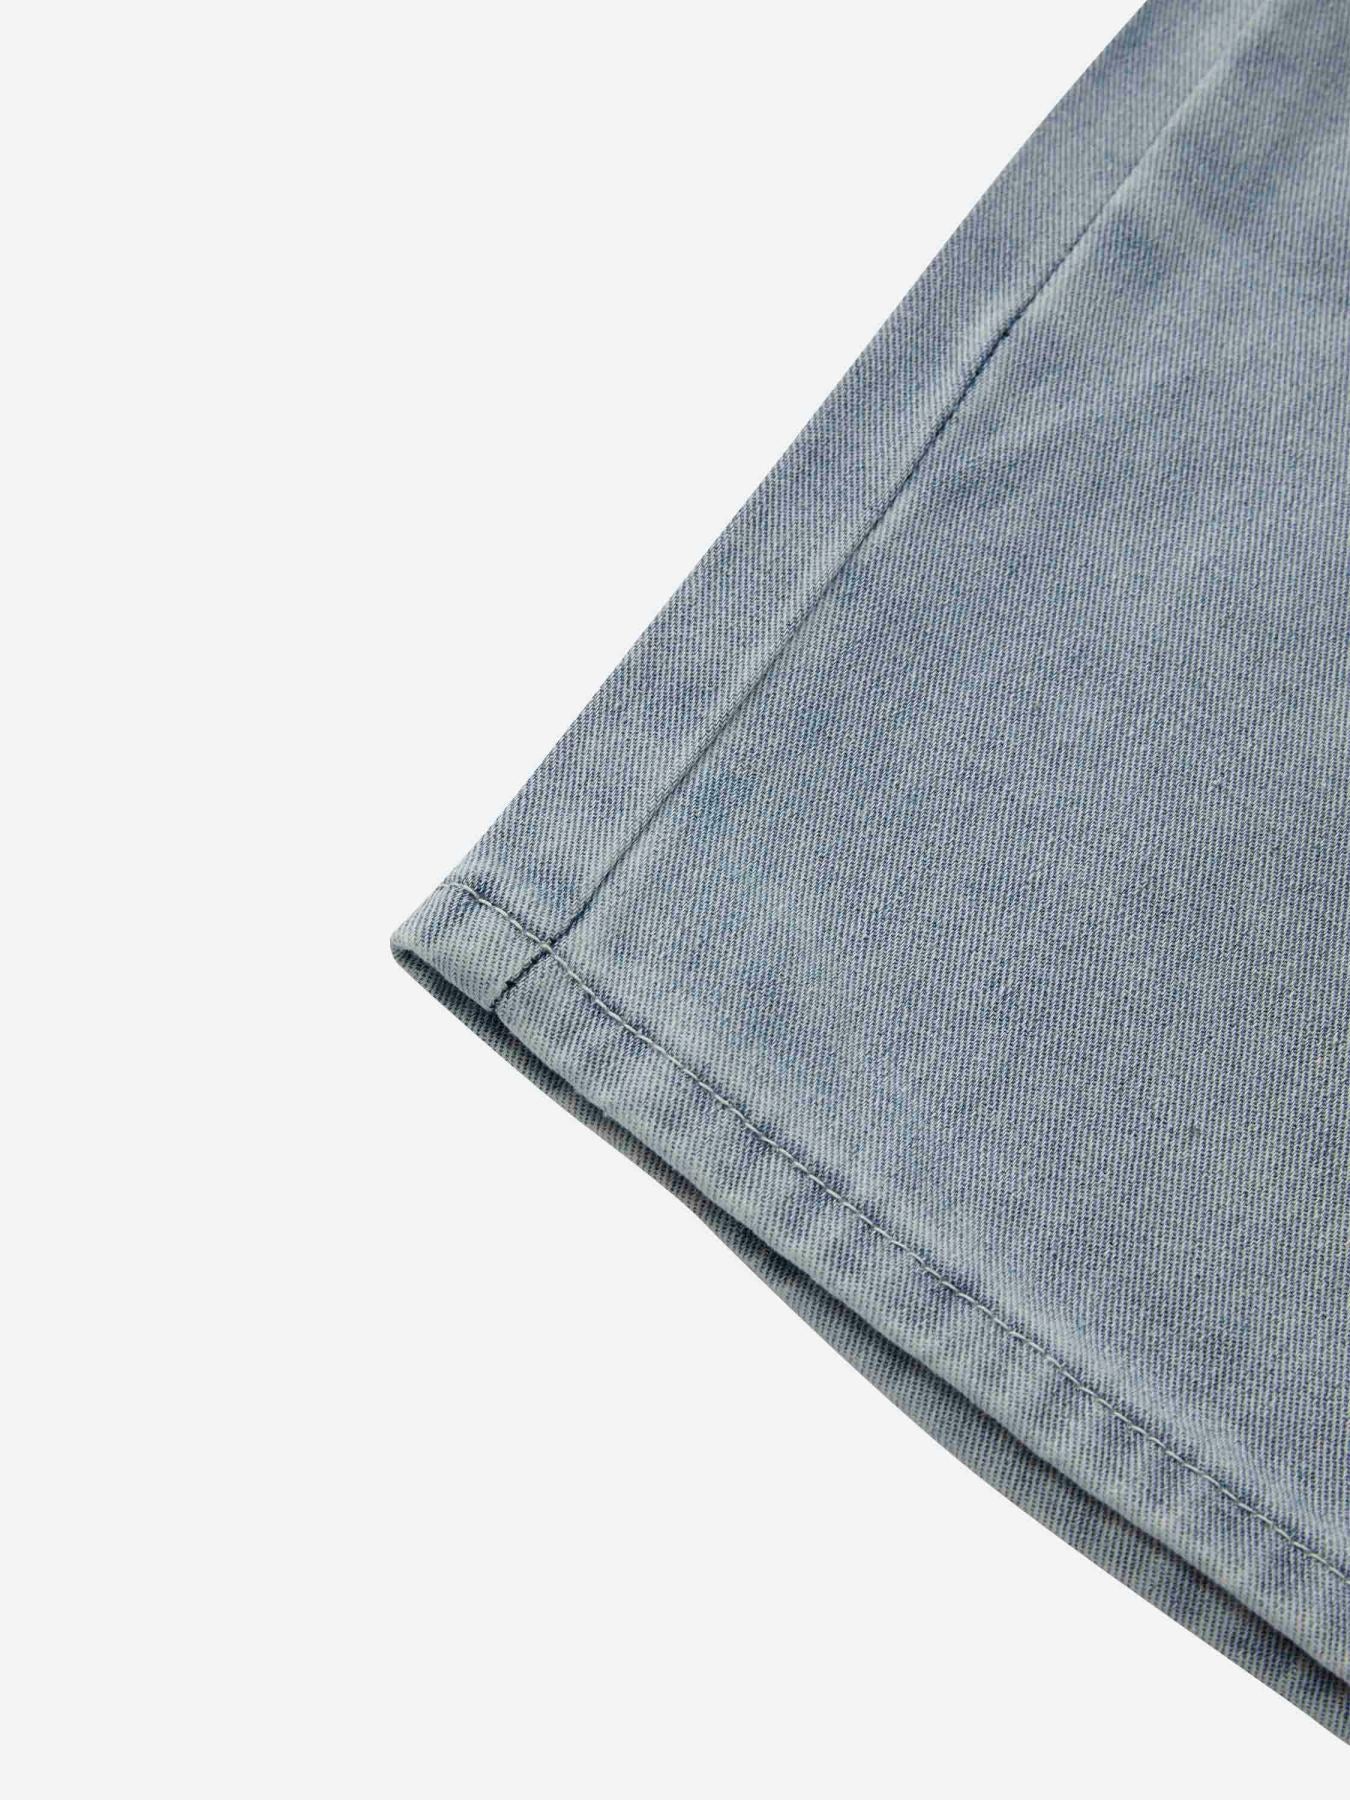 Thesupermade Printed Denim Shorts